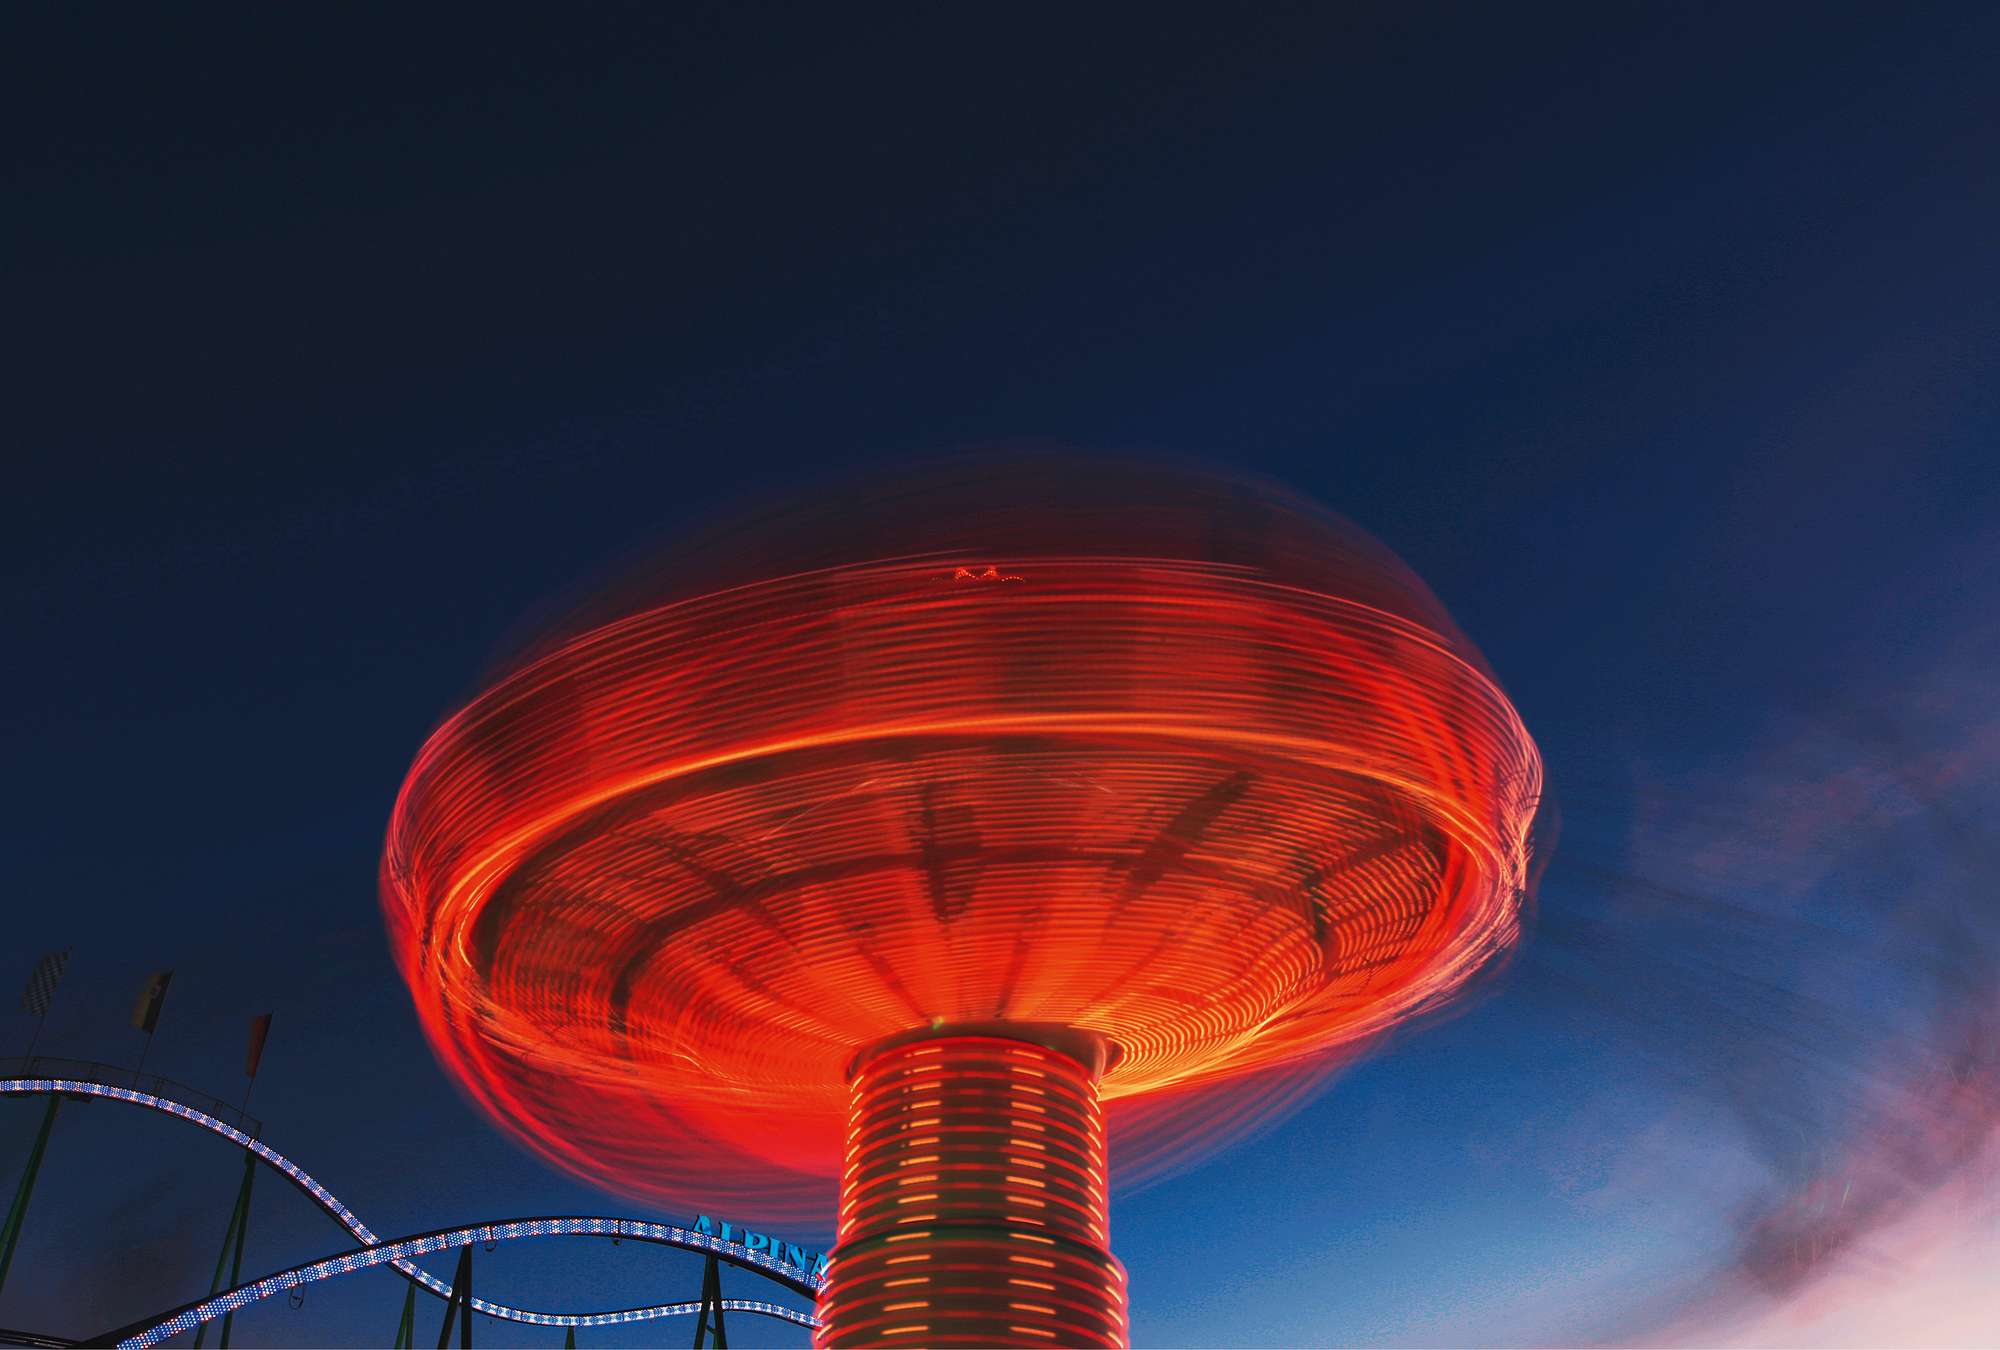             Karussell rot – Fototapete Rummel bei Nacht
        